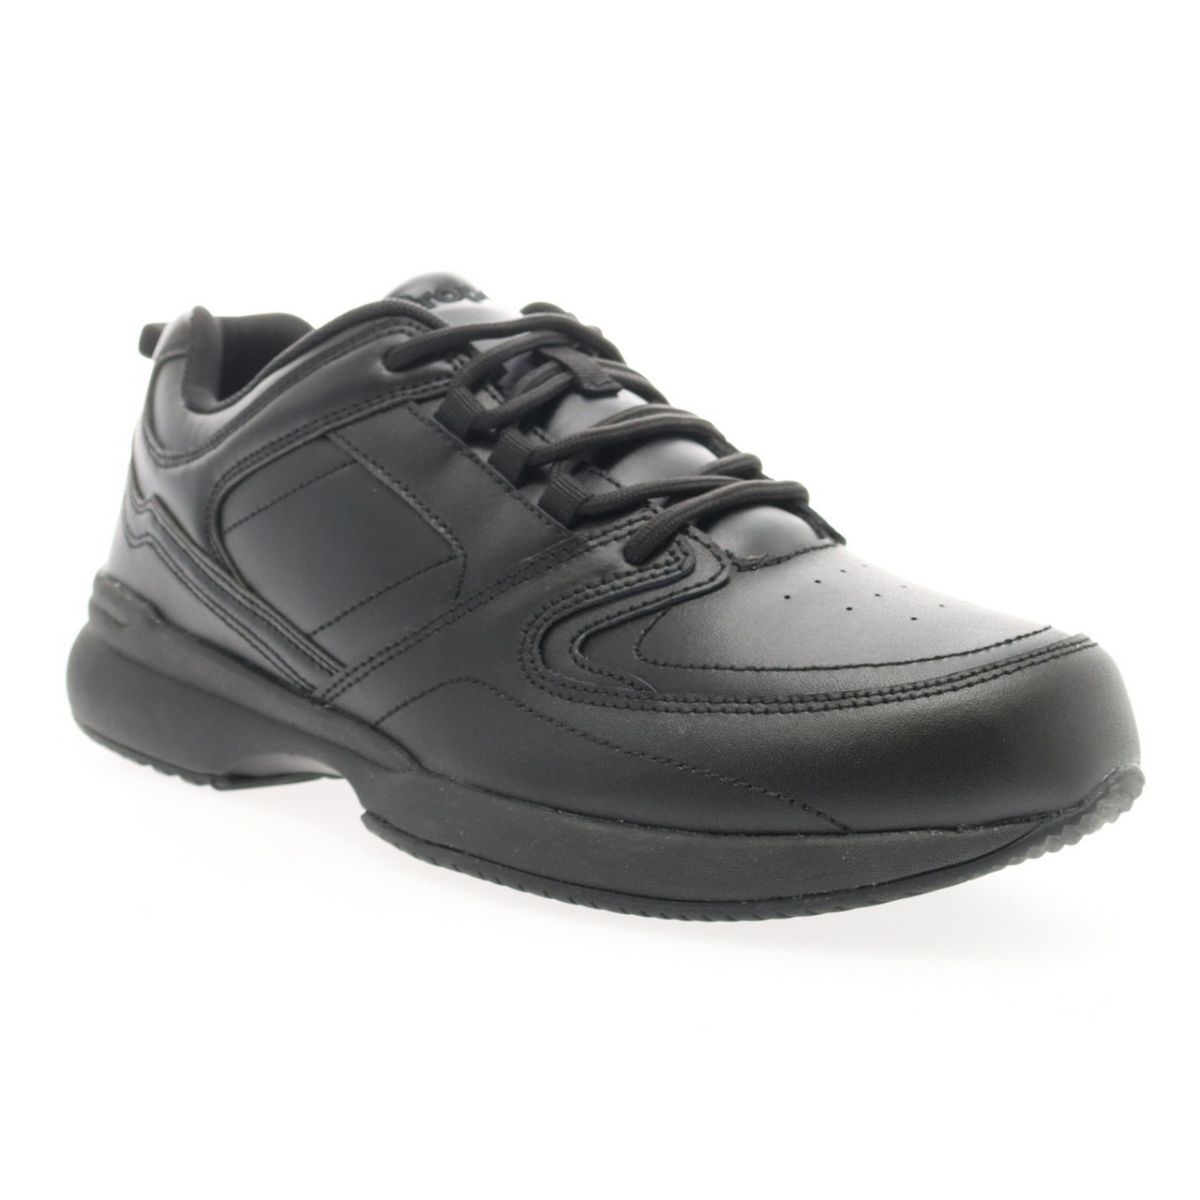 Propet Men's Life Walker Sport Sneaker Black - MAA272LBLK BLACK - BLACK, 7.5 Wide